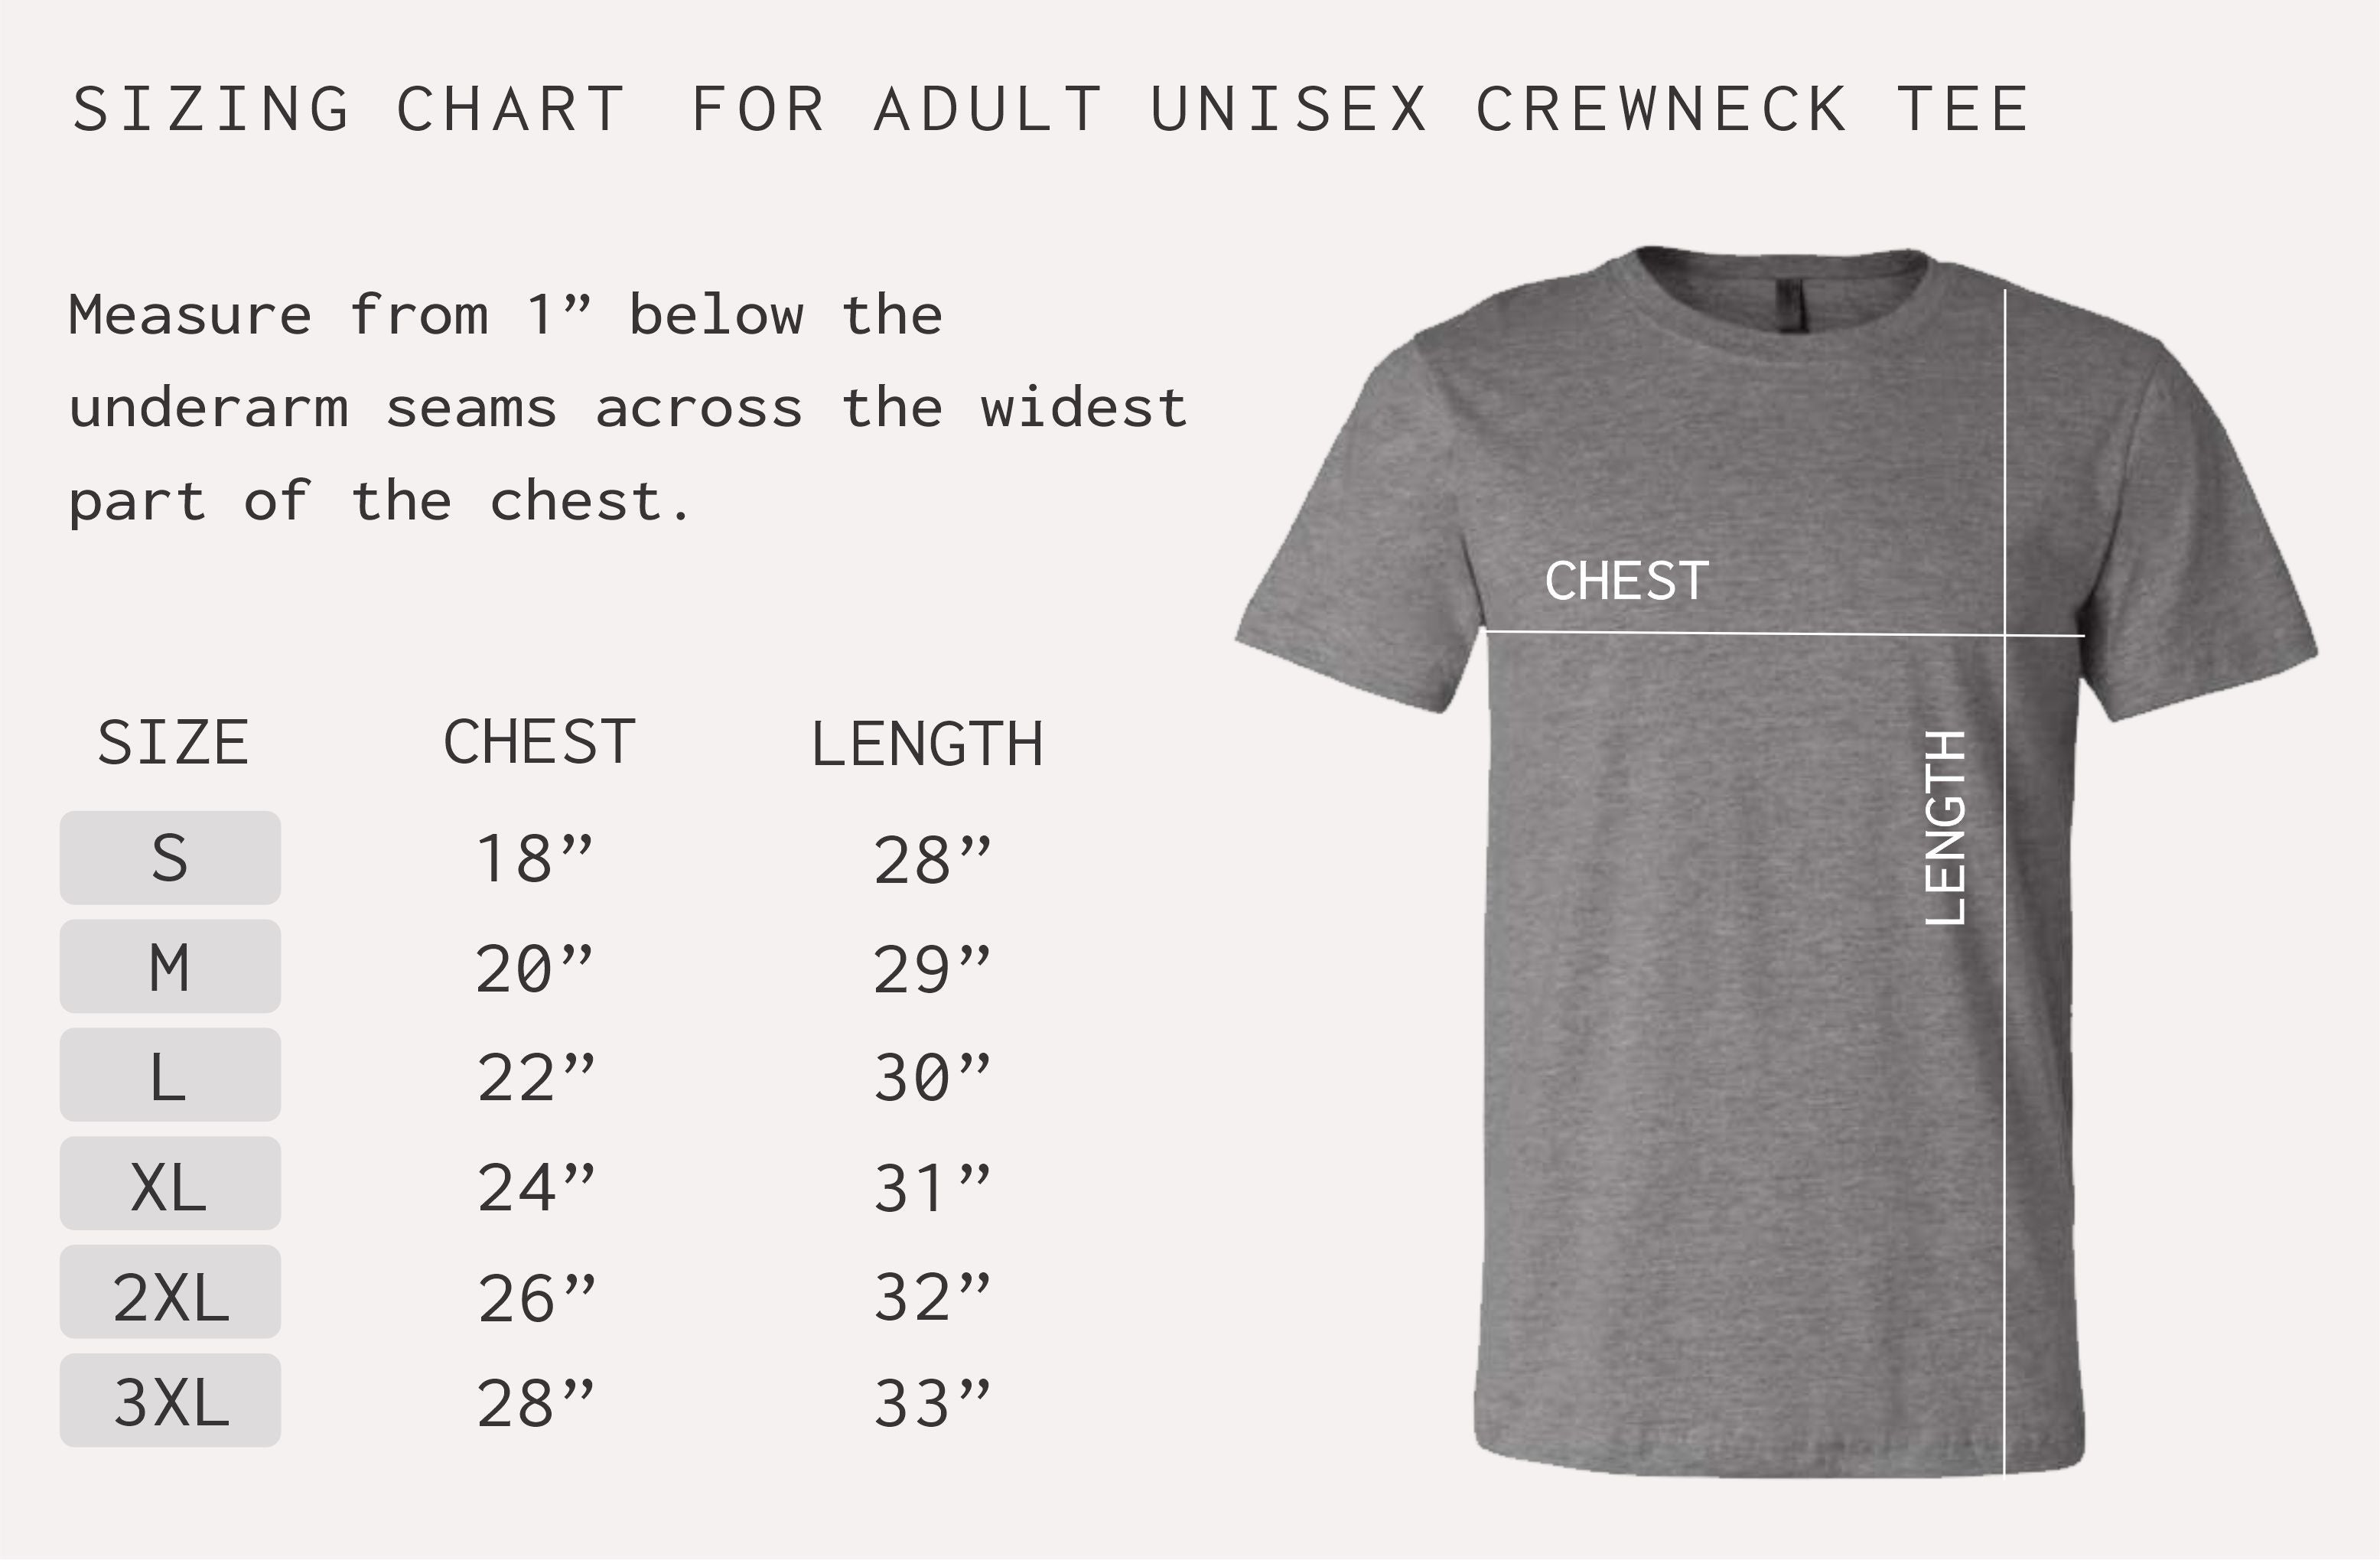 Adult Unisex Bearly Awake T-shirt